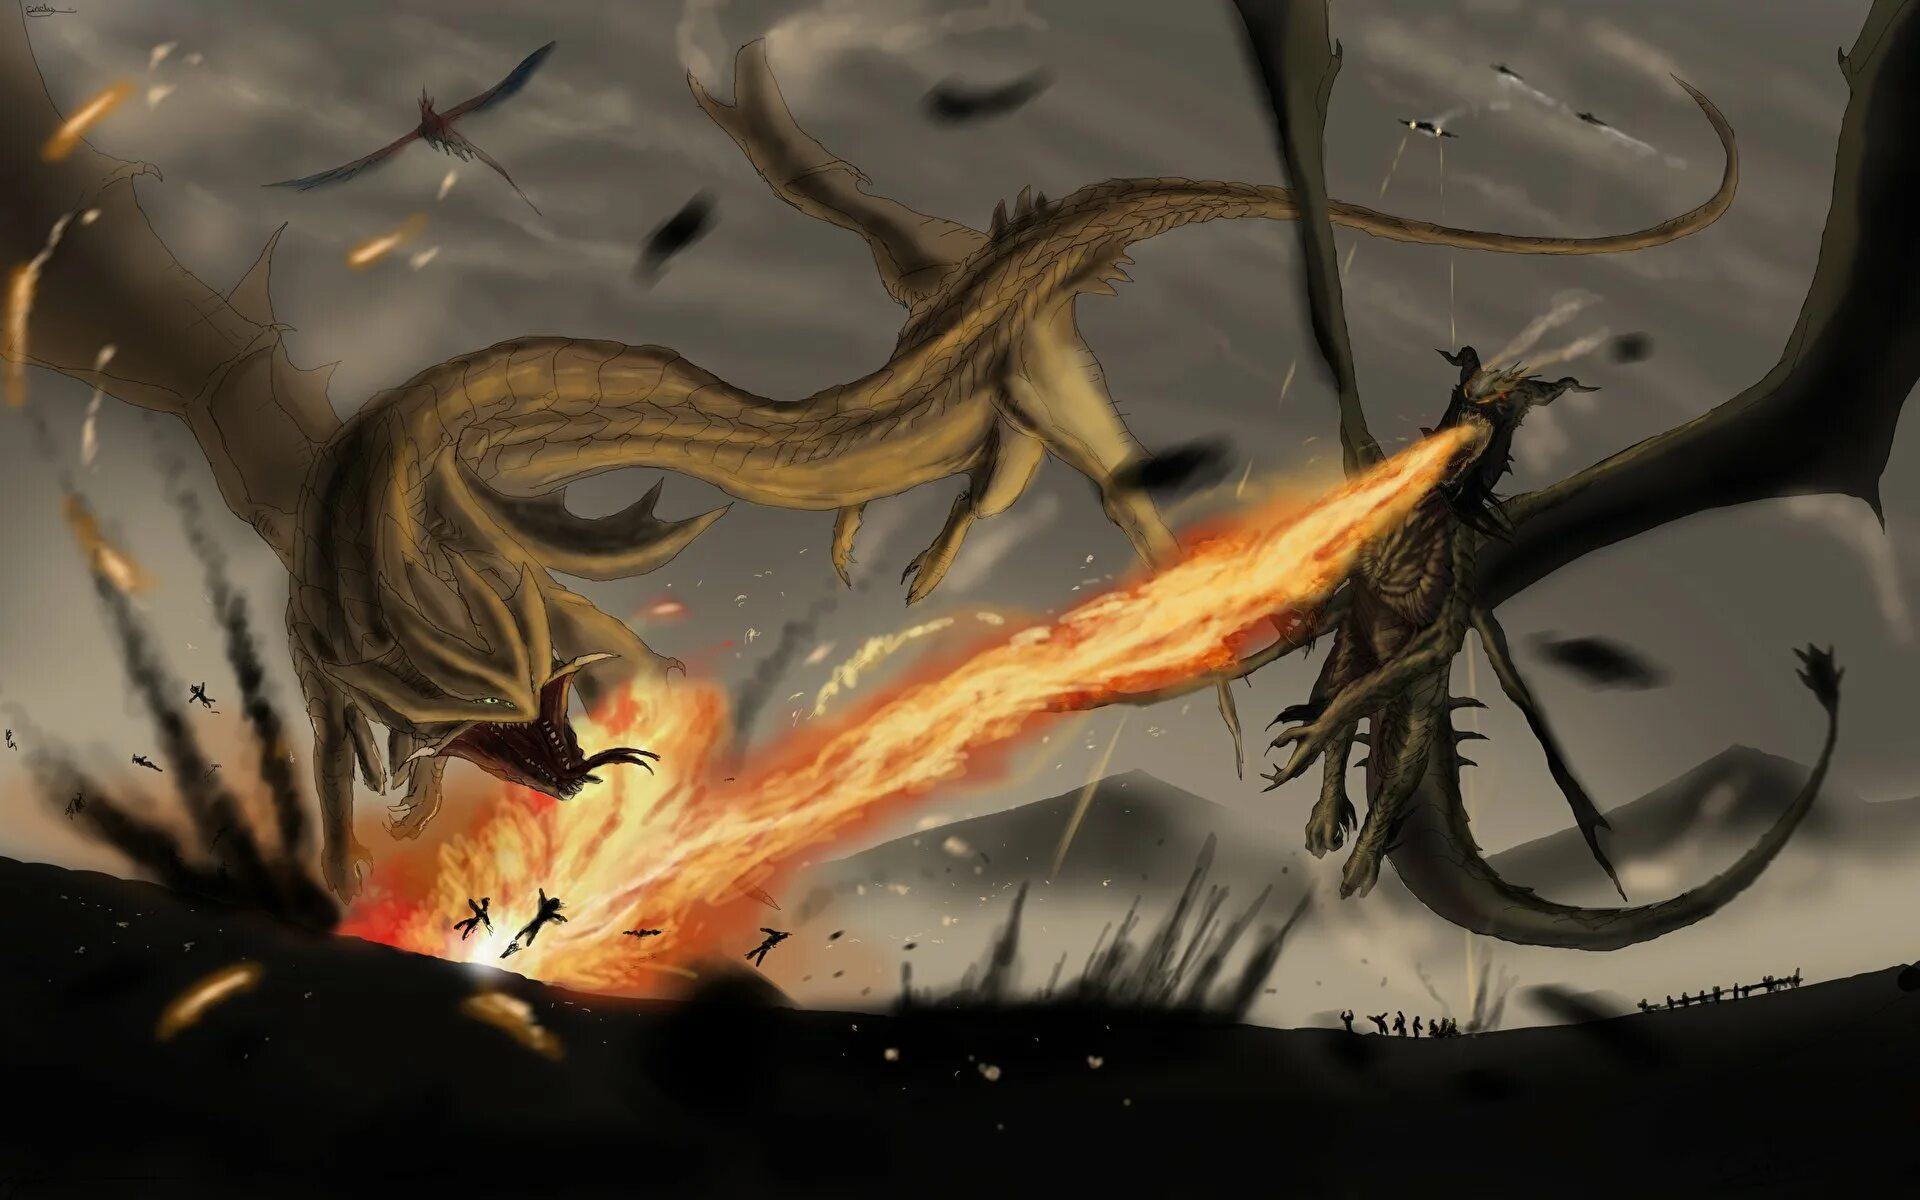 Саламандр Огненный дракон. Дракон в огне. Огненная змея арт. Огненный дракон арт. Дракон темного пламени